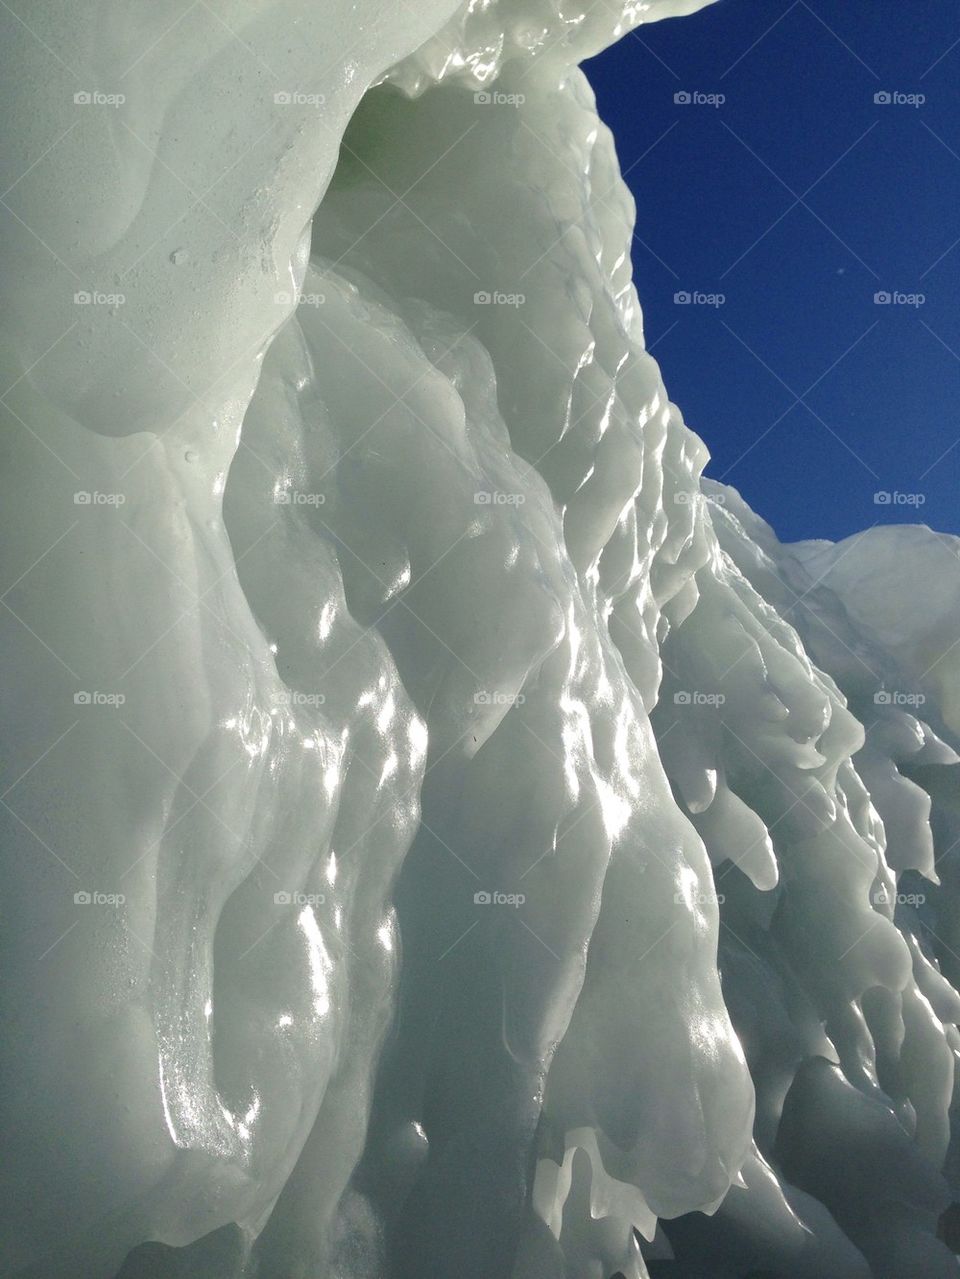 Ice caves